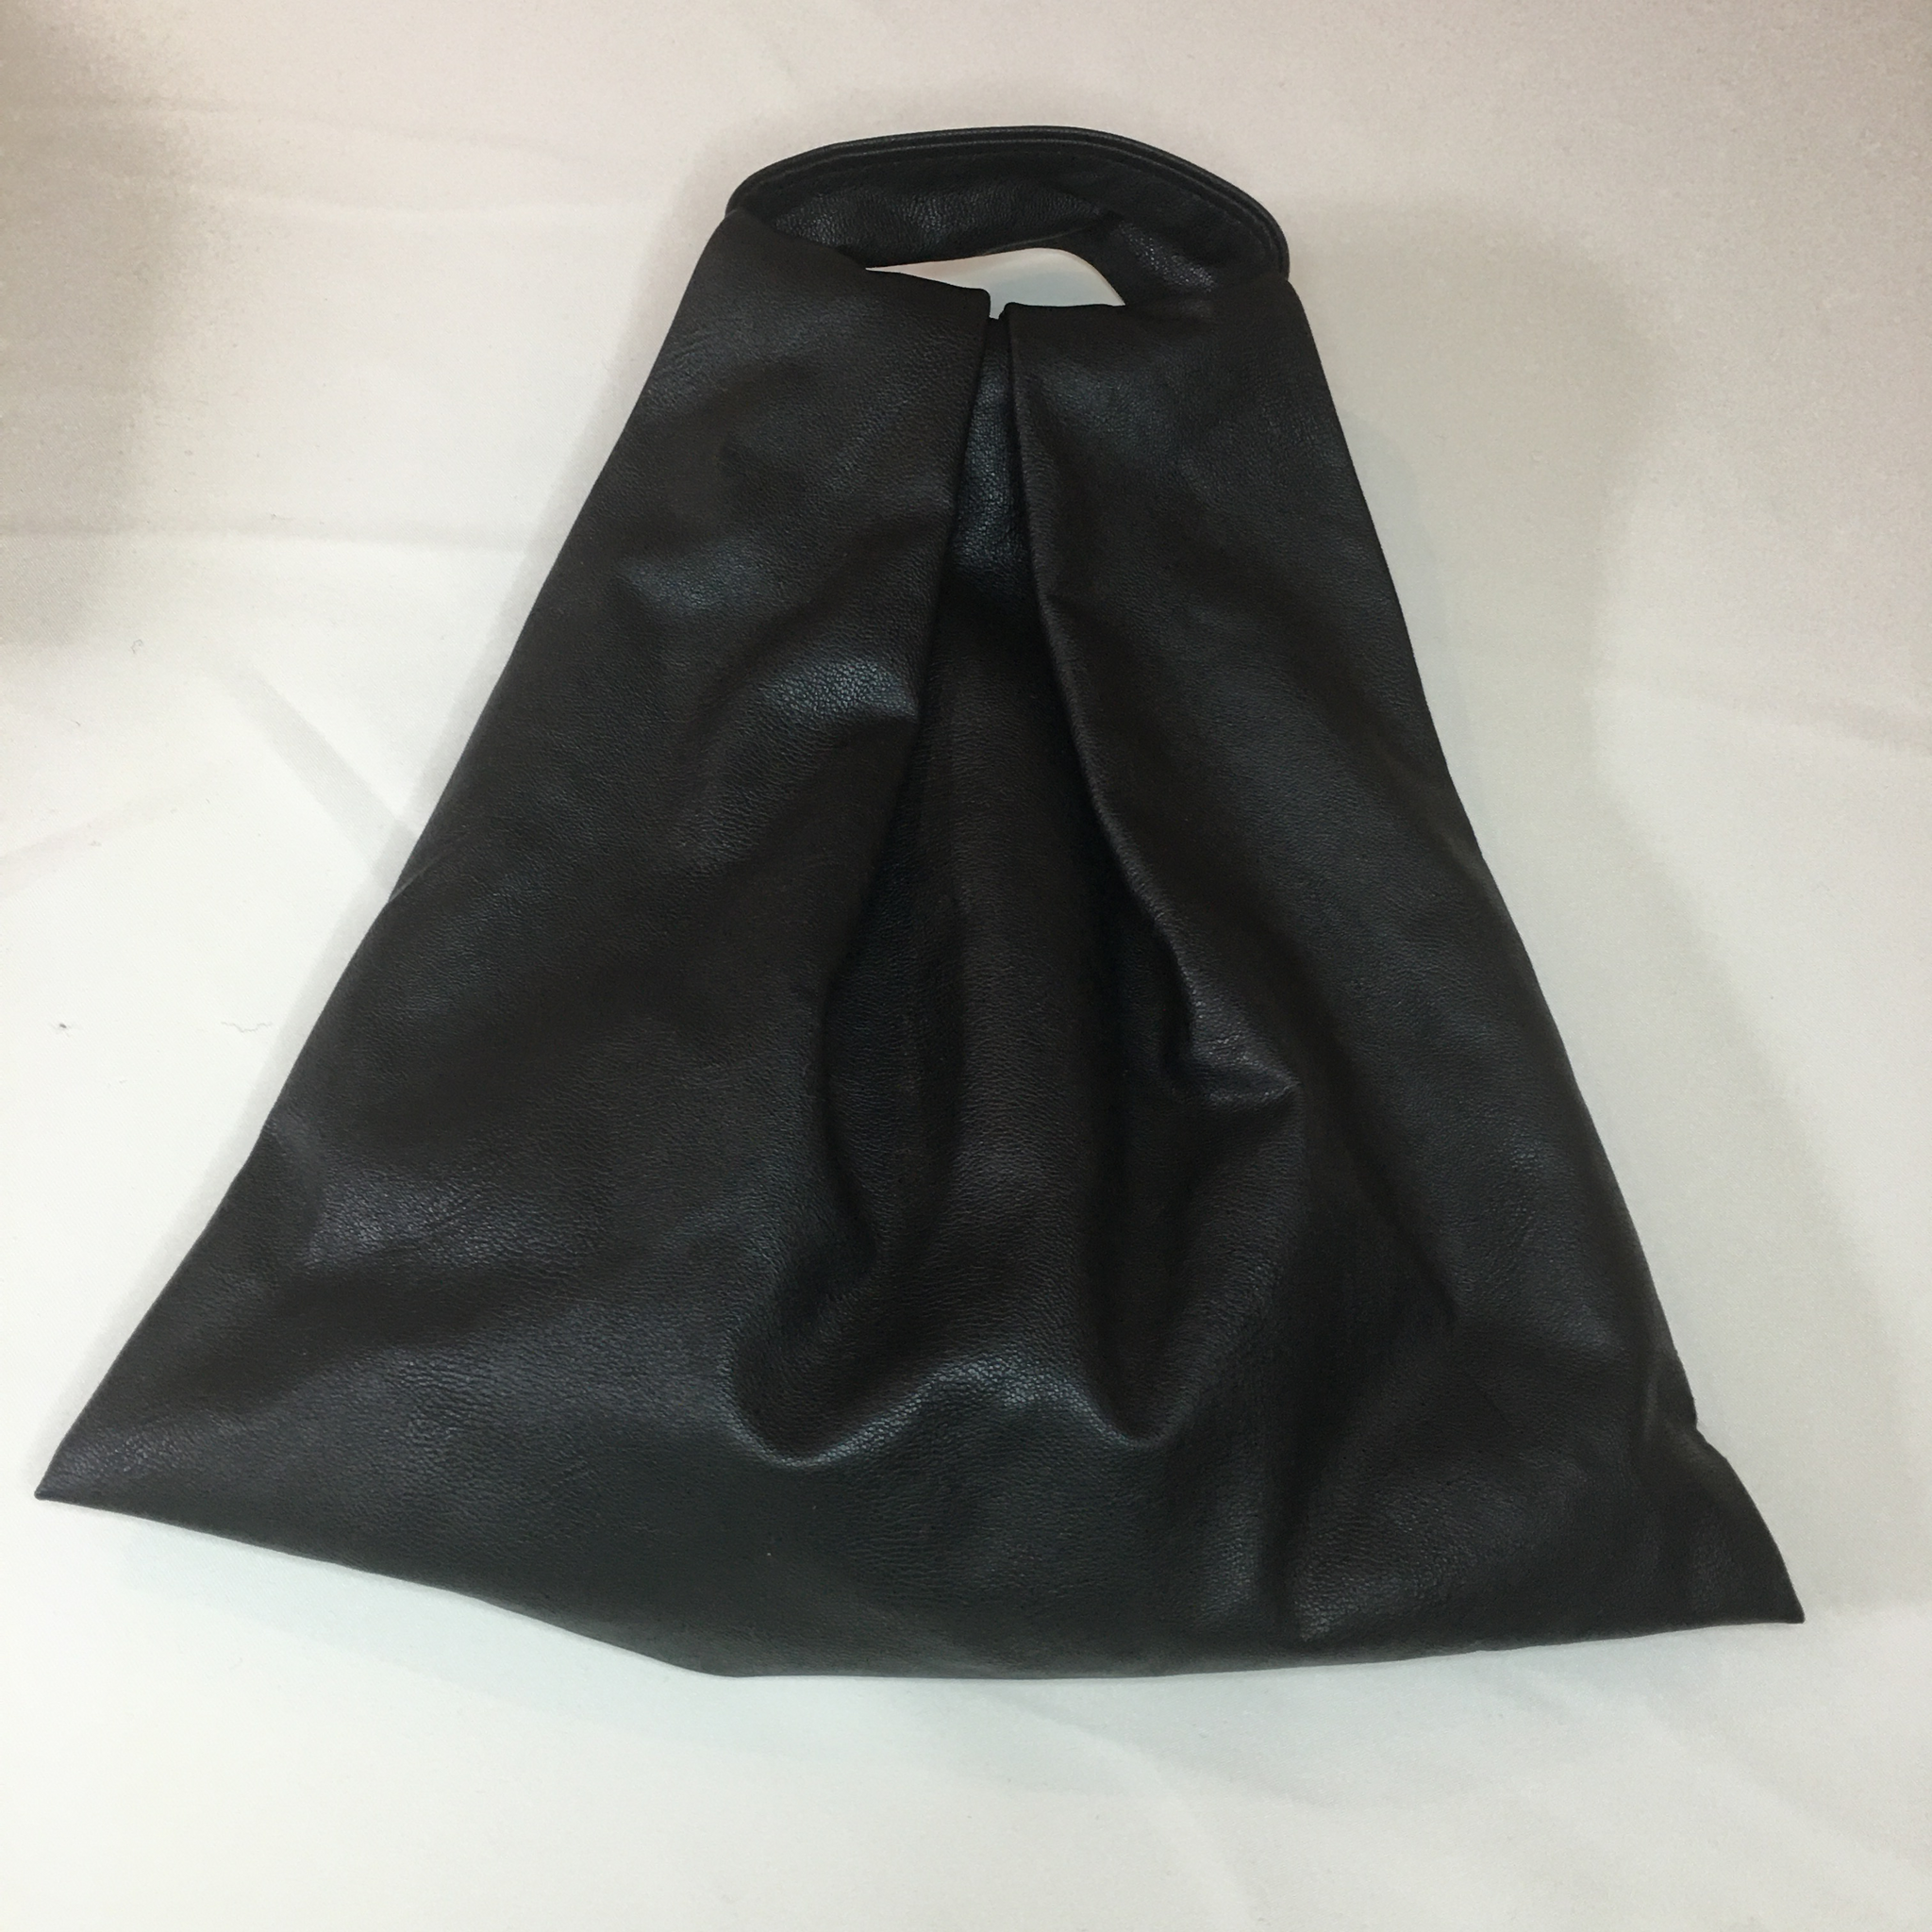 Black leatherette purse